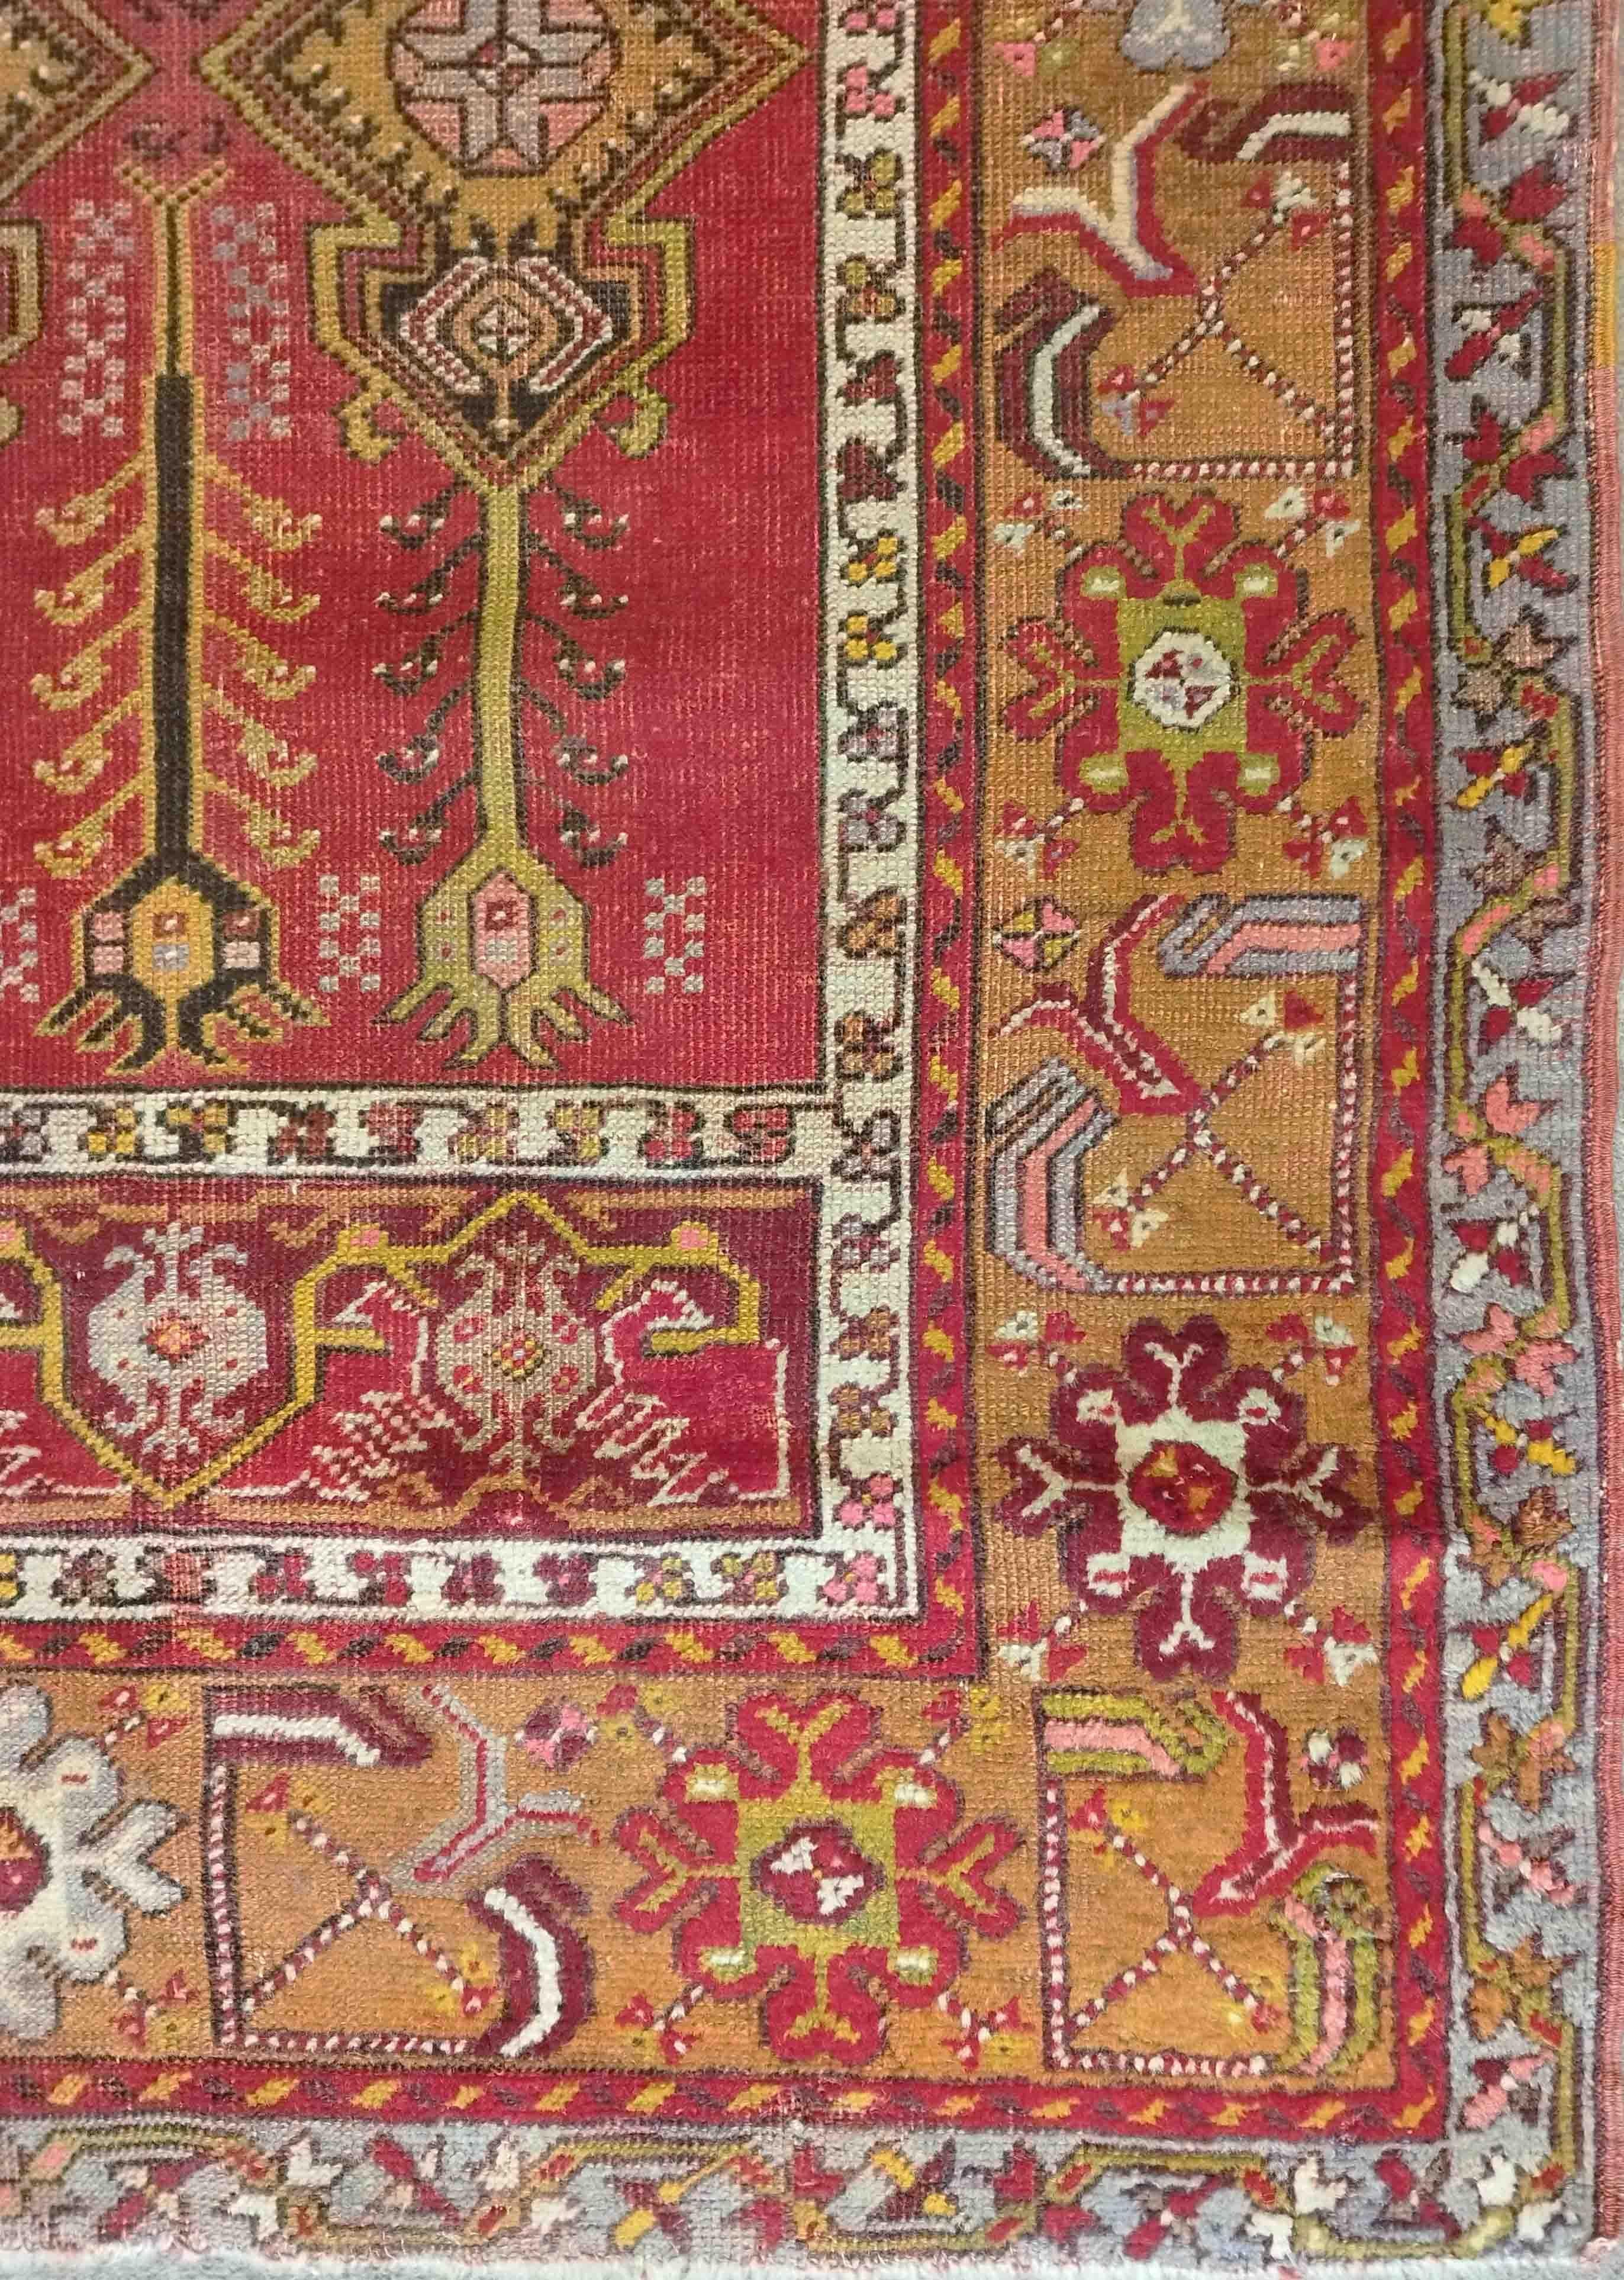  Kirchir Turkish Carpet, 19th Century - N° 728 For Sale 3